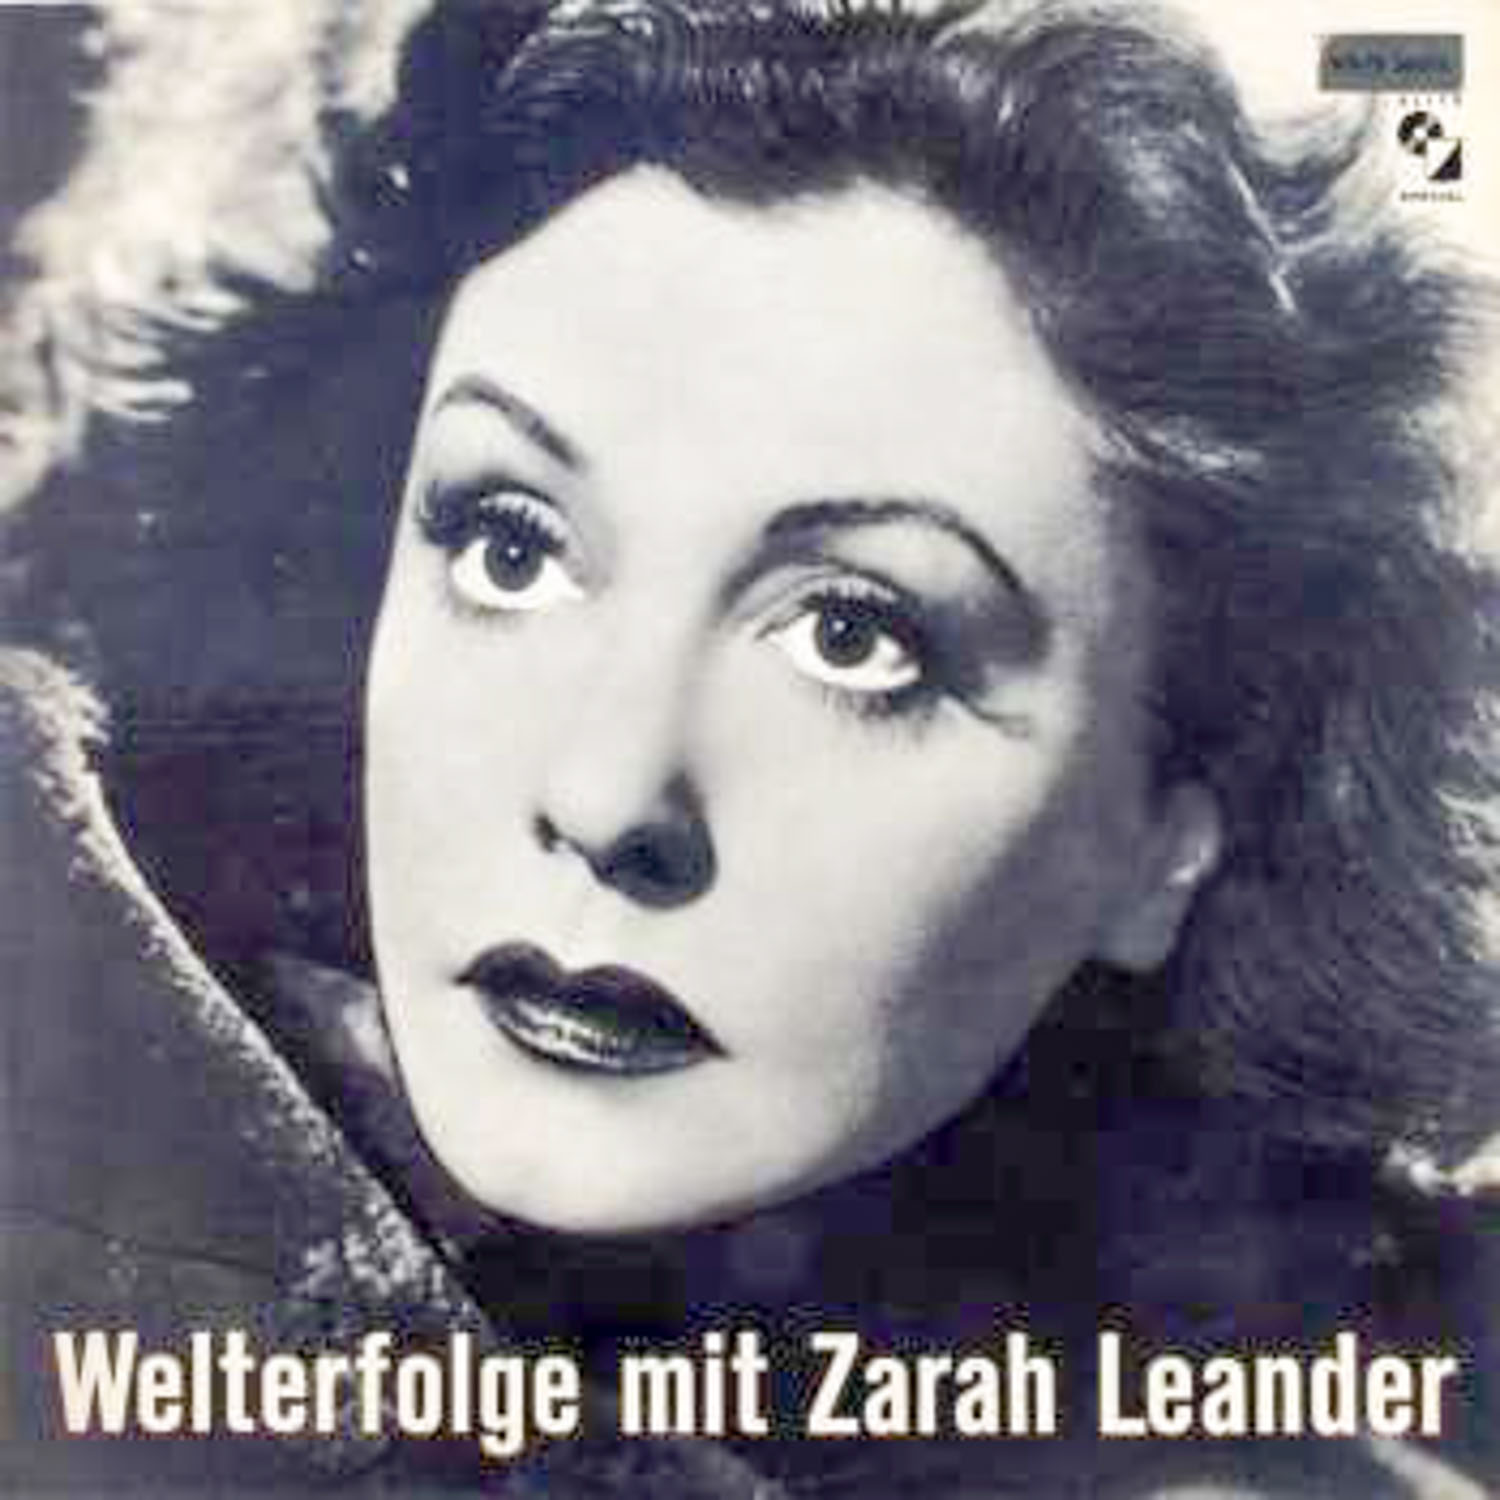 Zarah Leander  Welterfolge mit Zarah Leander (PLPS 30075)  *LP 12'' (Vinyl)*. 